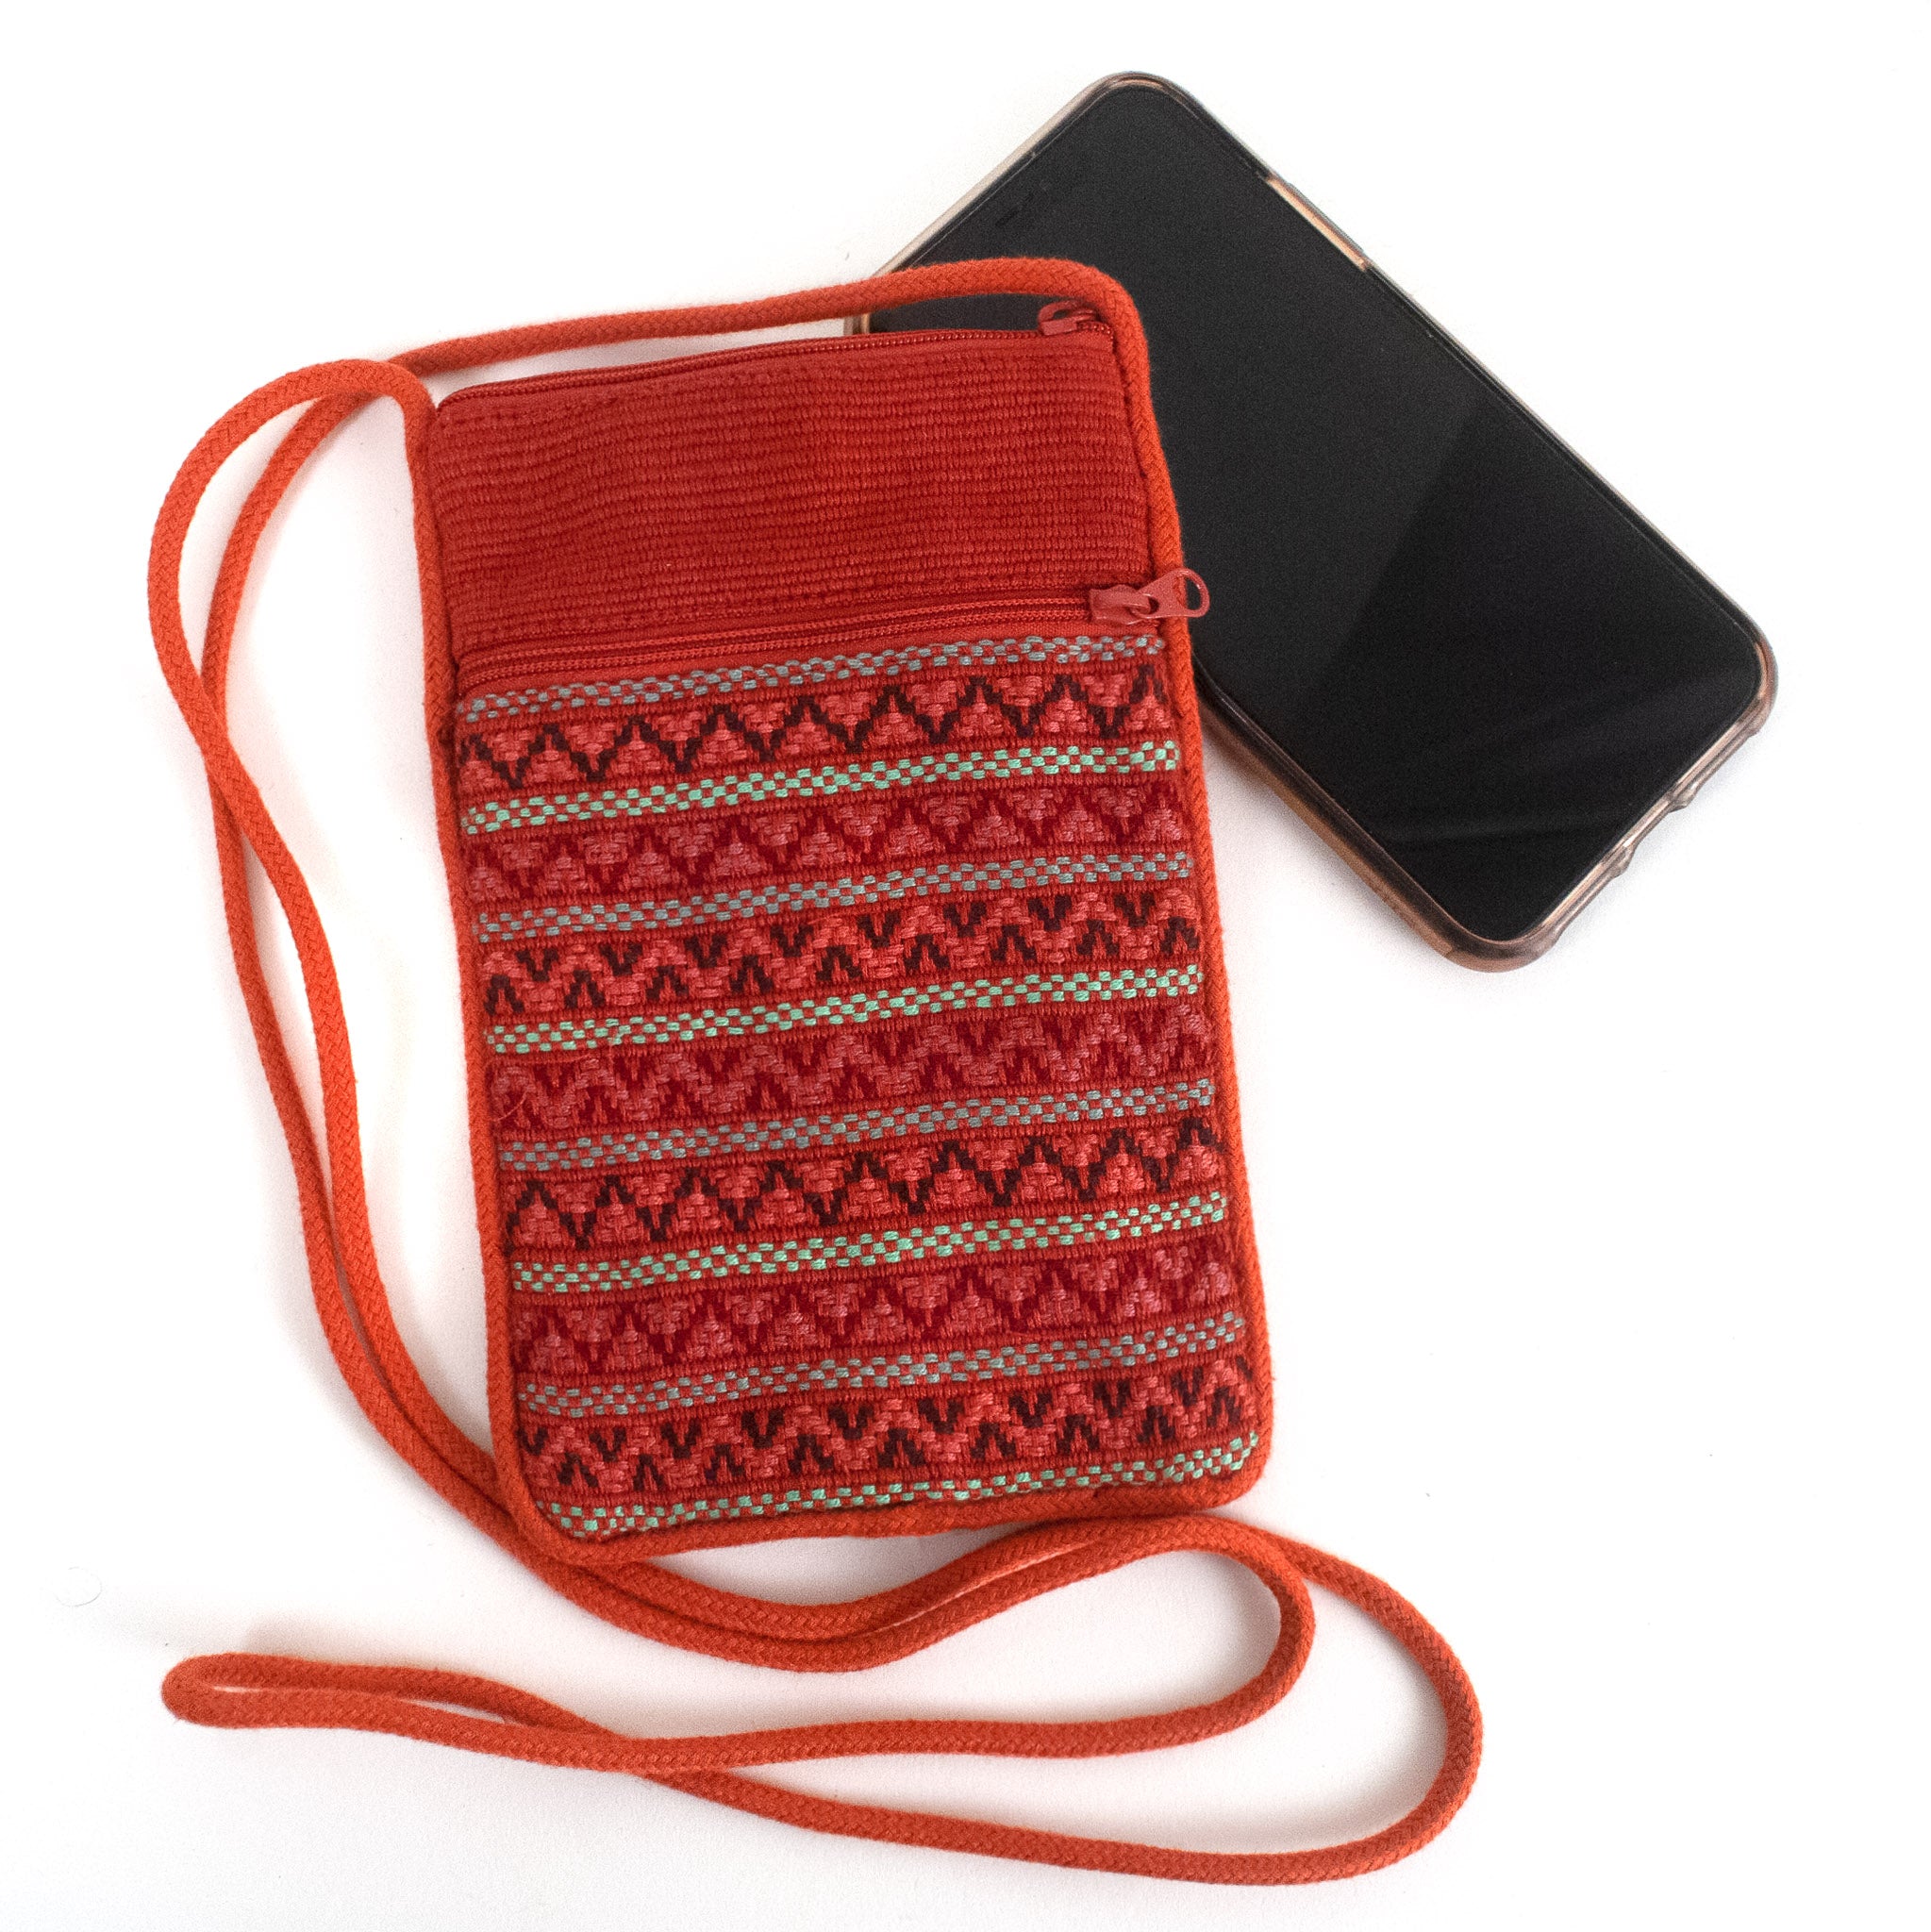 Women's Wallet Large Capacity Mobile Phone Bag, Card Slot Adjustable S –  www.Nuroco.com